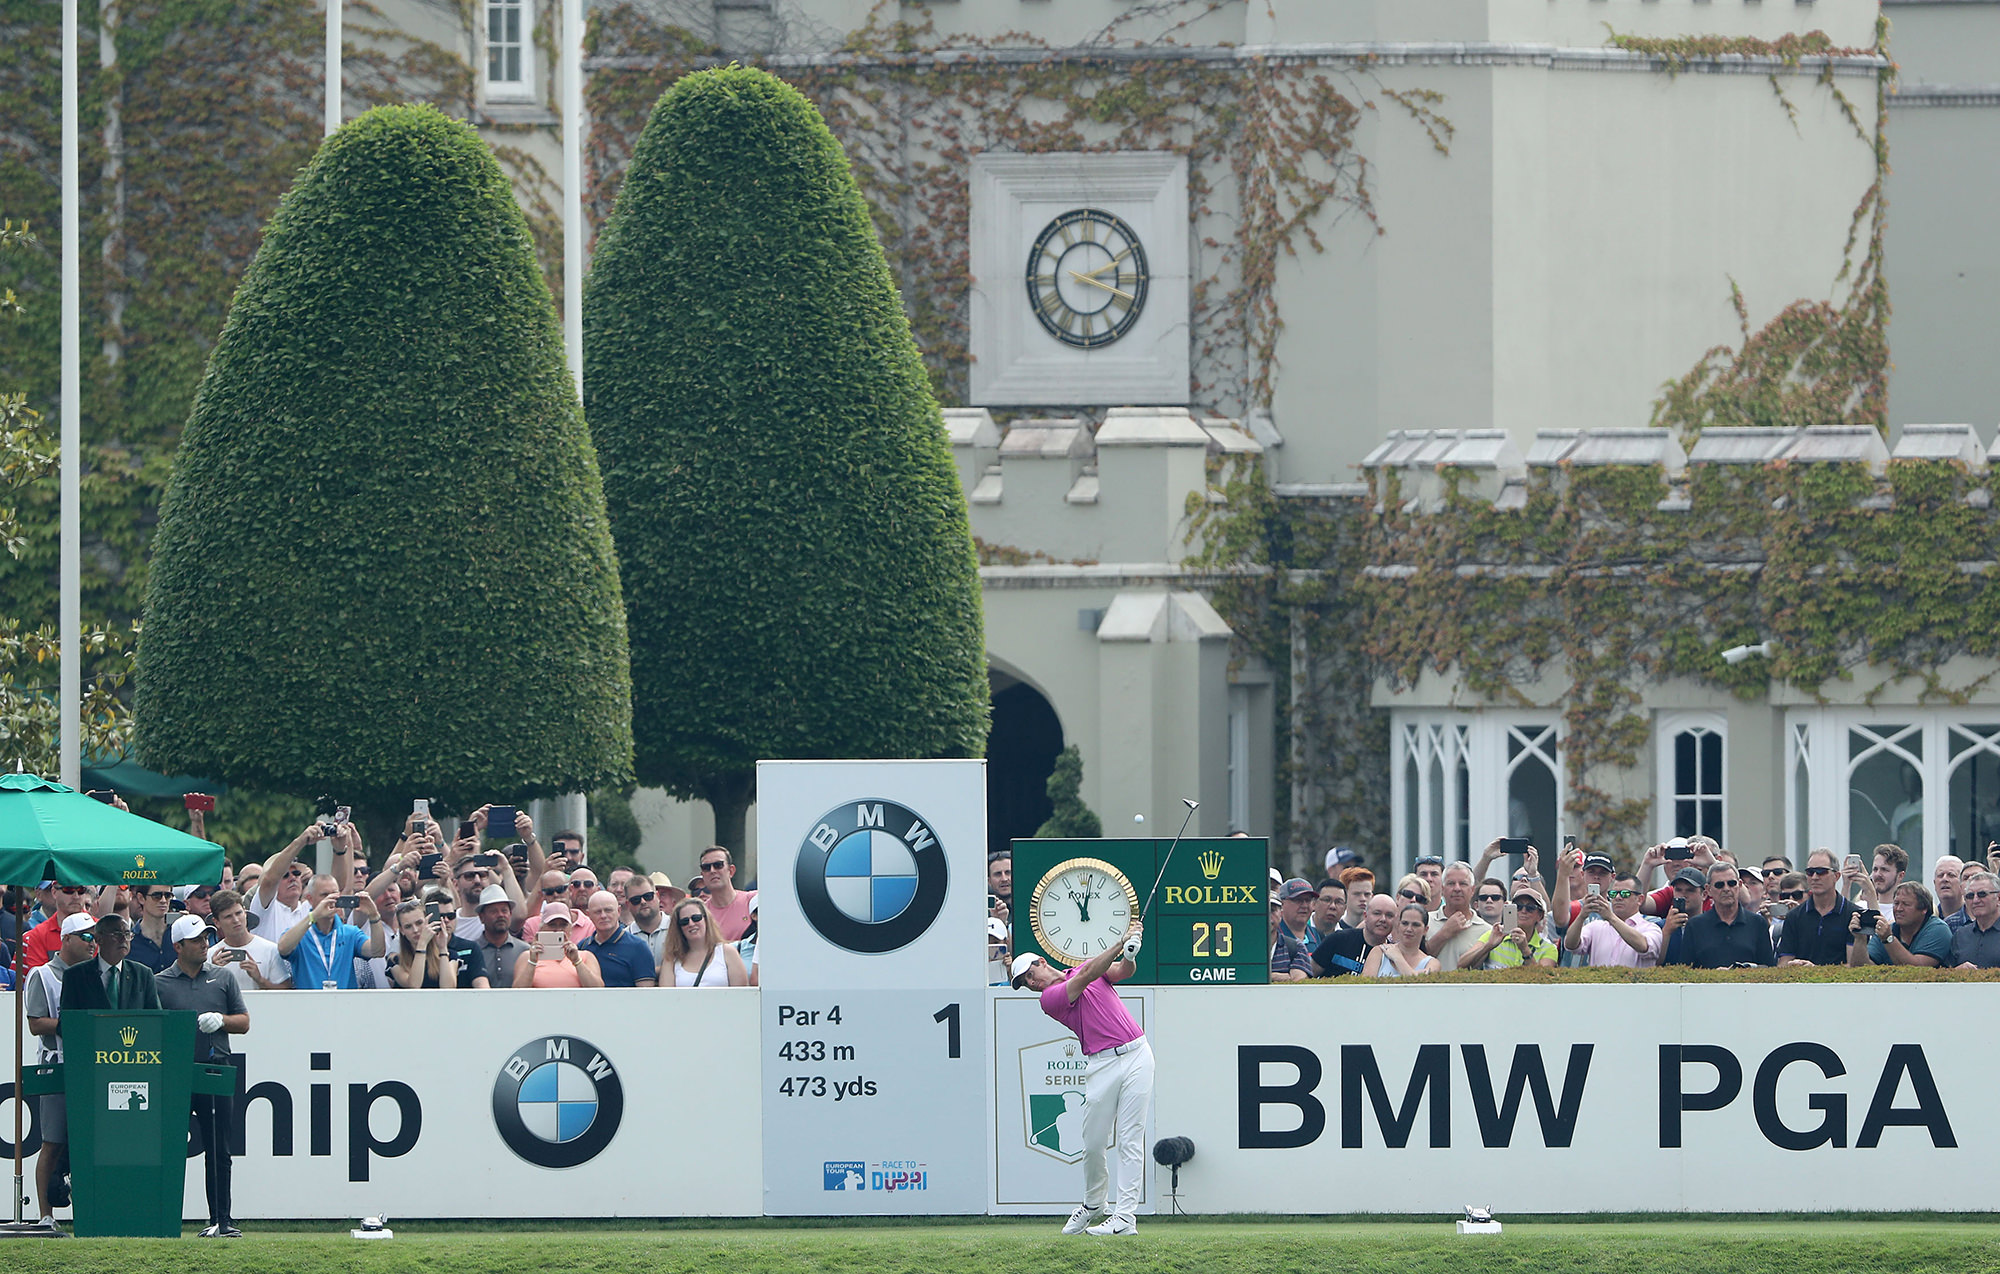 2019 BMW PGA Championship prize money